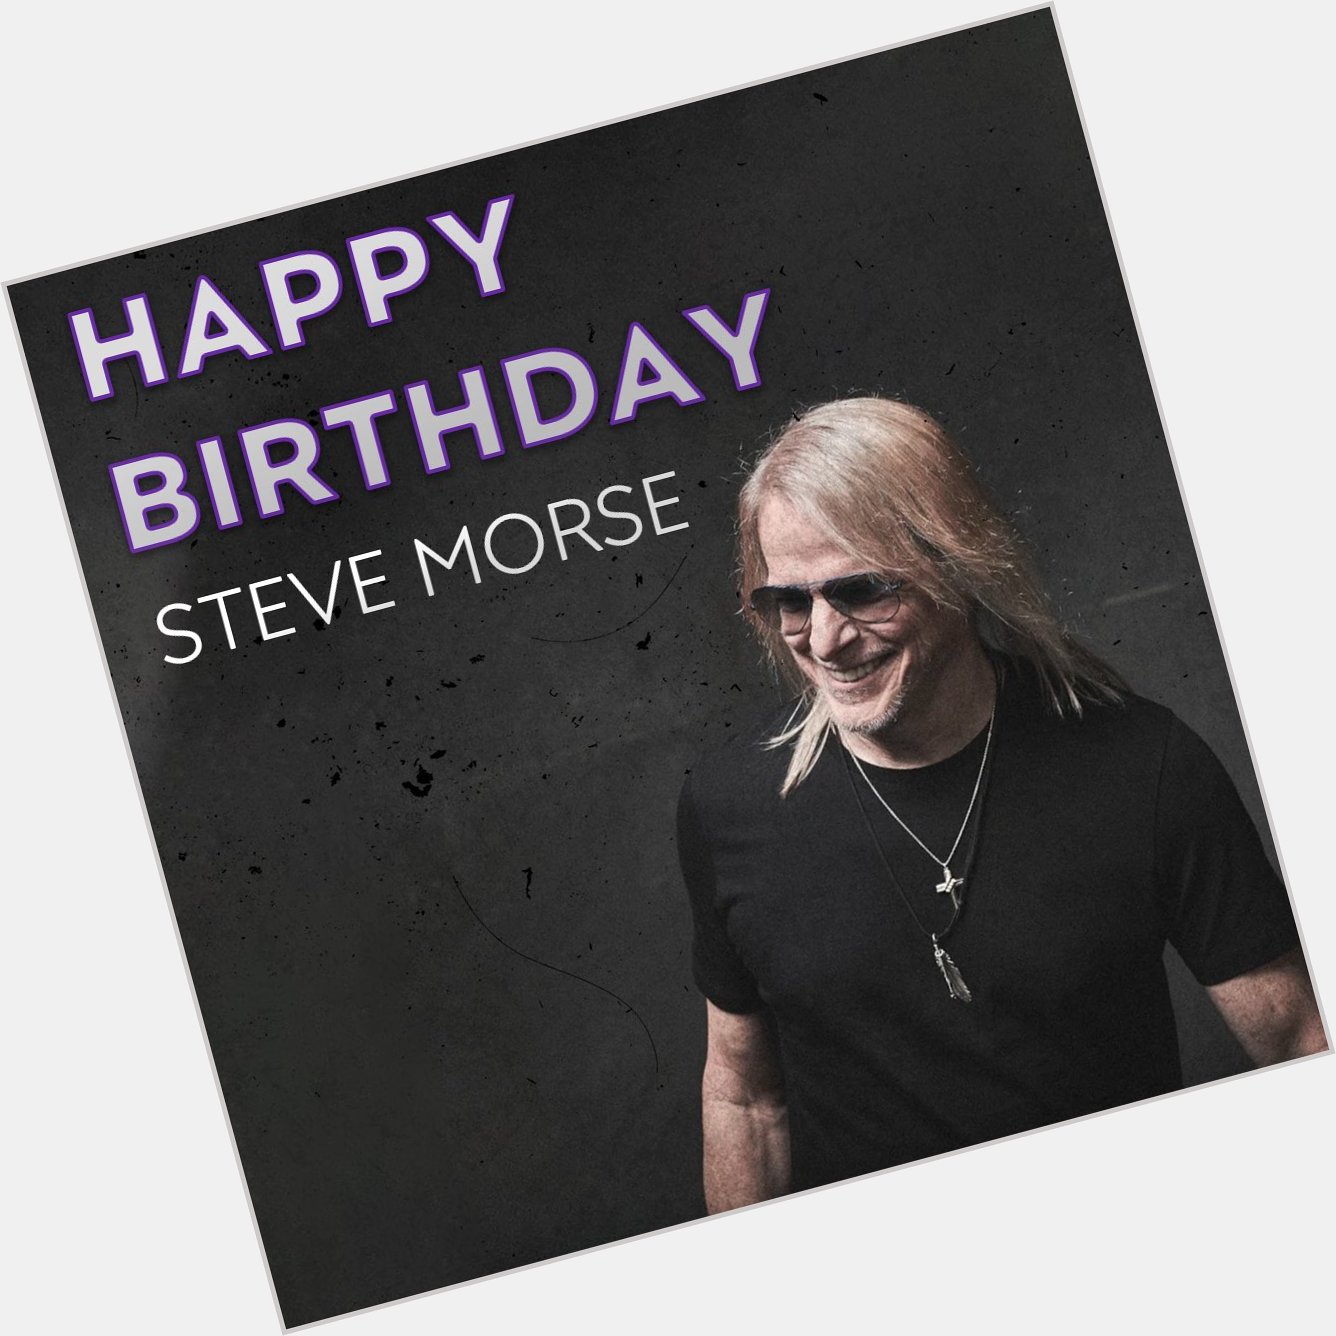 Happy birthday Steve Morse! 